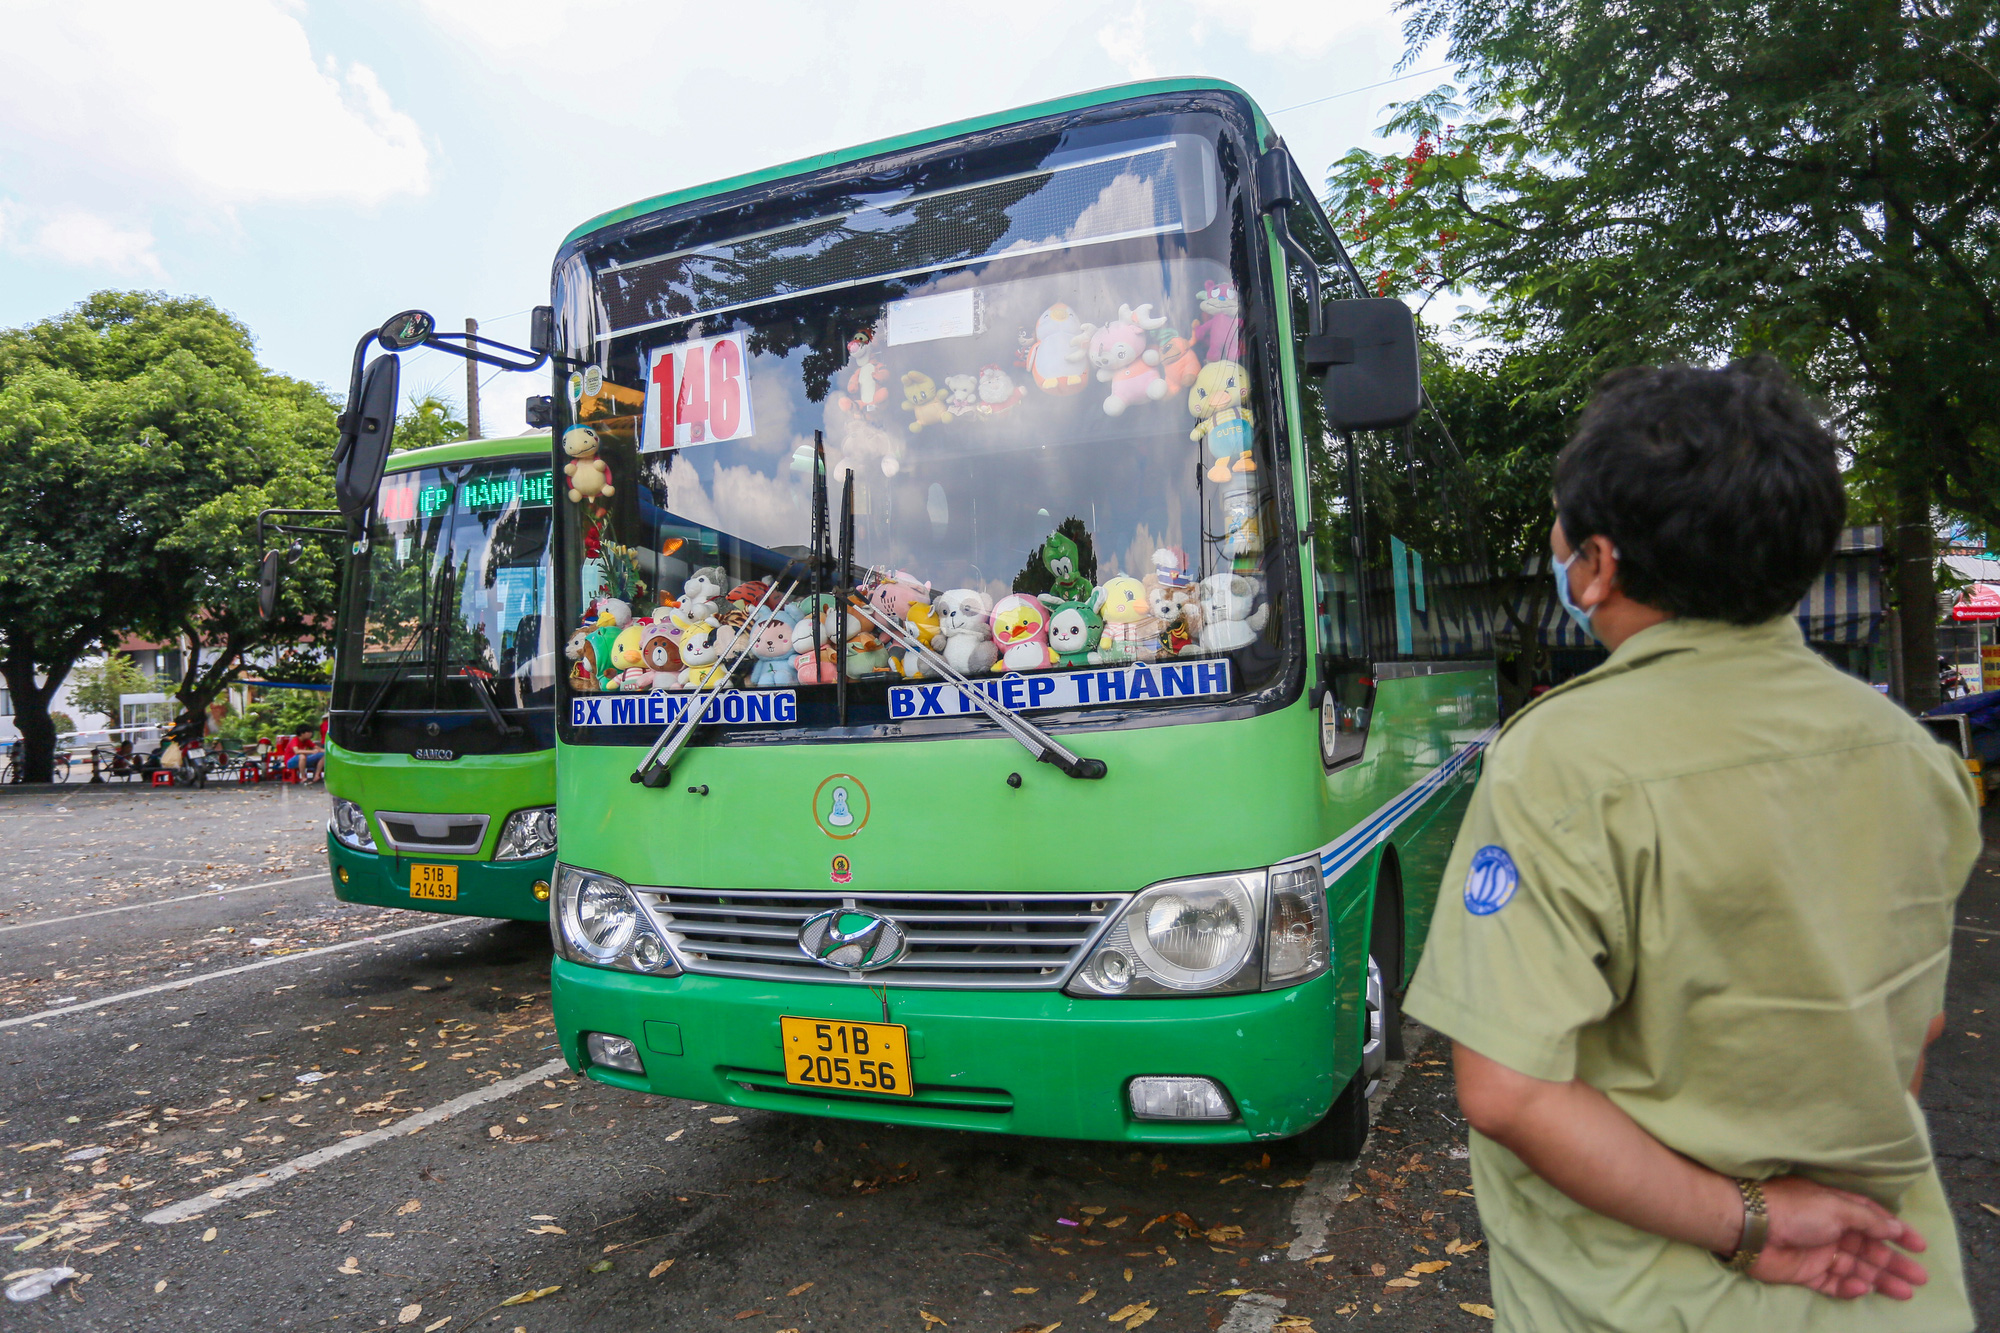 Ho Chi Minh City to pilot free Wi-Fi on public buses